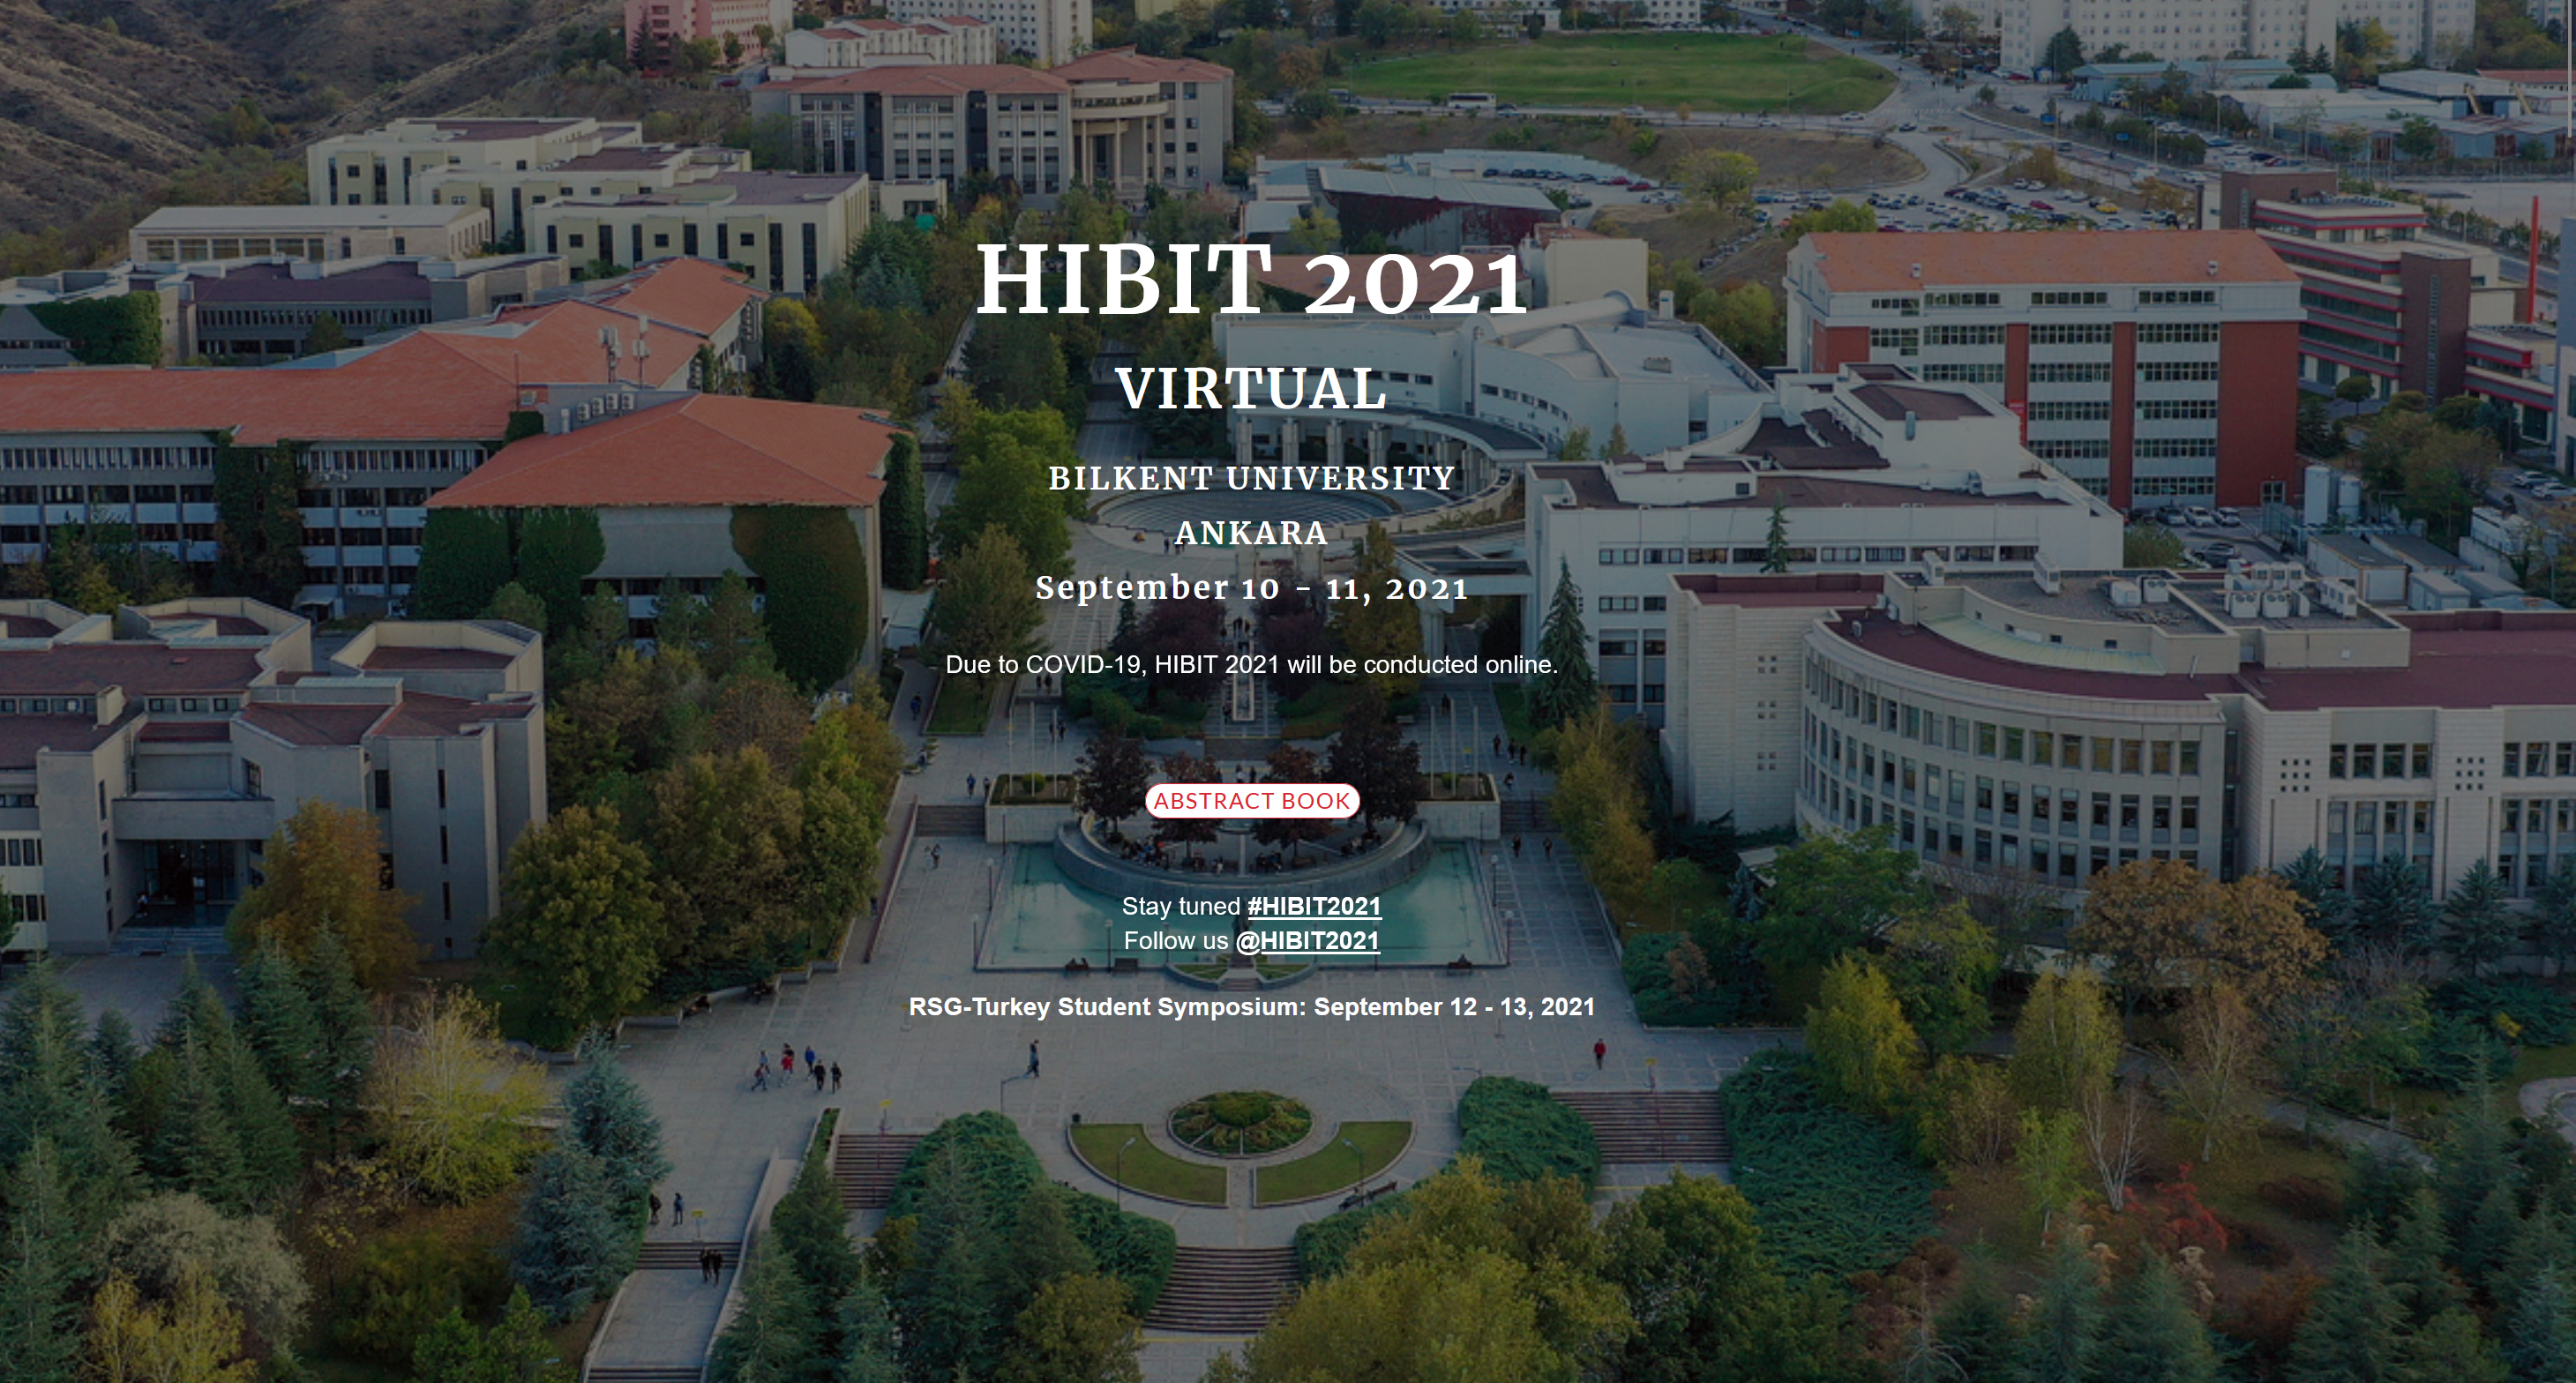 HIBIT 2021 Symposium will be Organized by Bilkent University